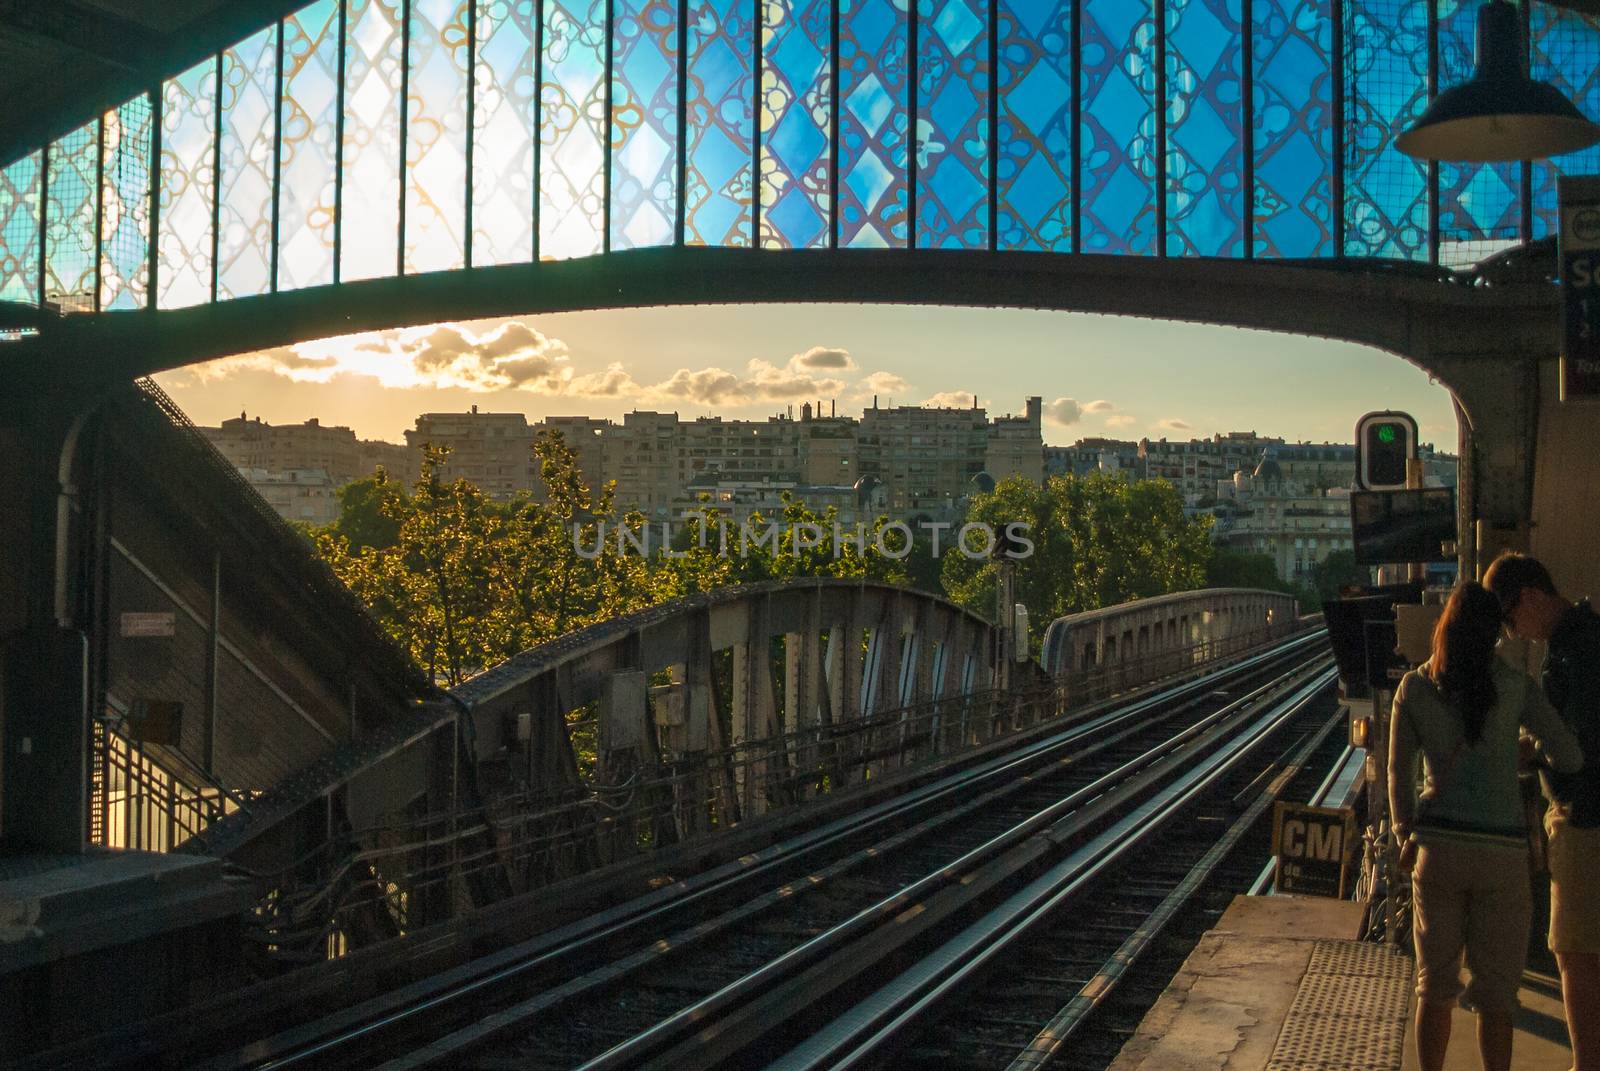 Old metro tram station in Paris sunset sunlight evening rails